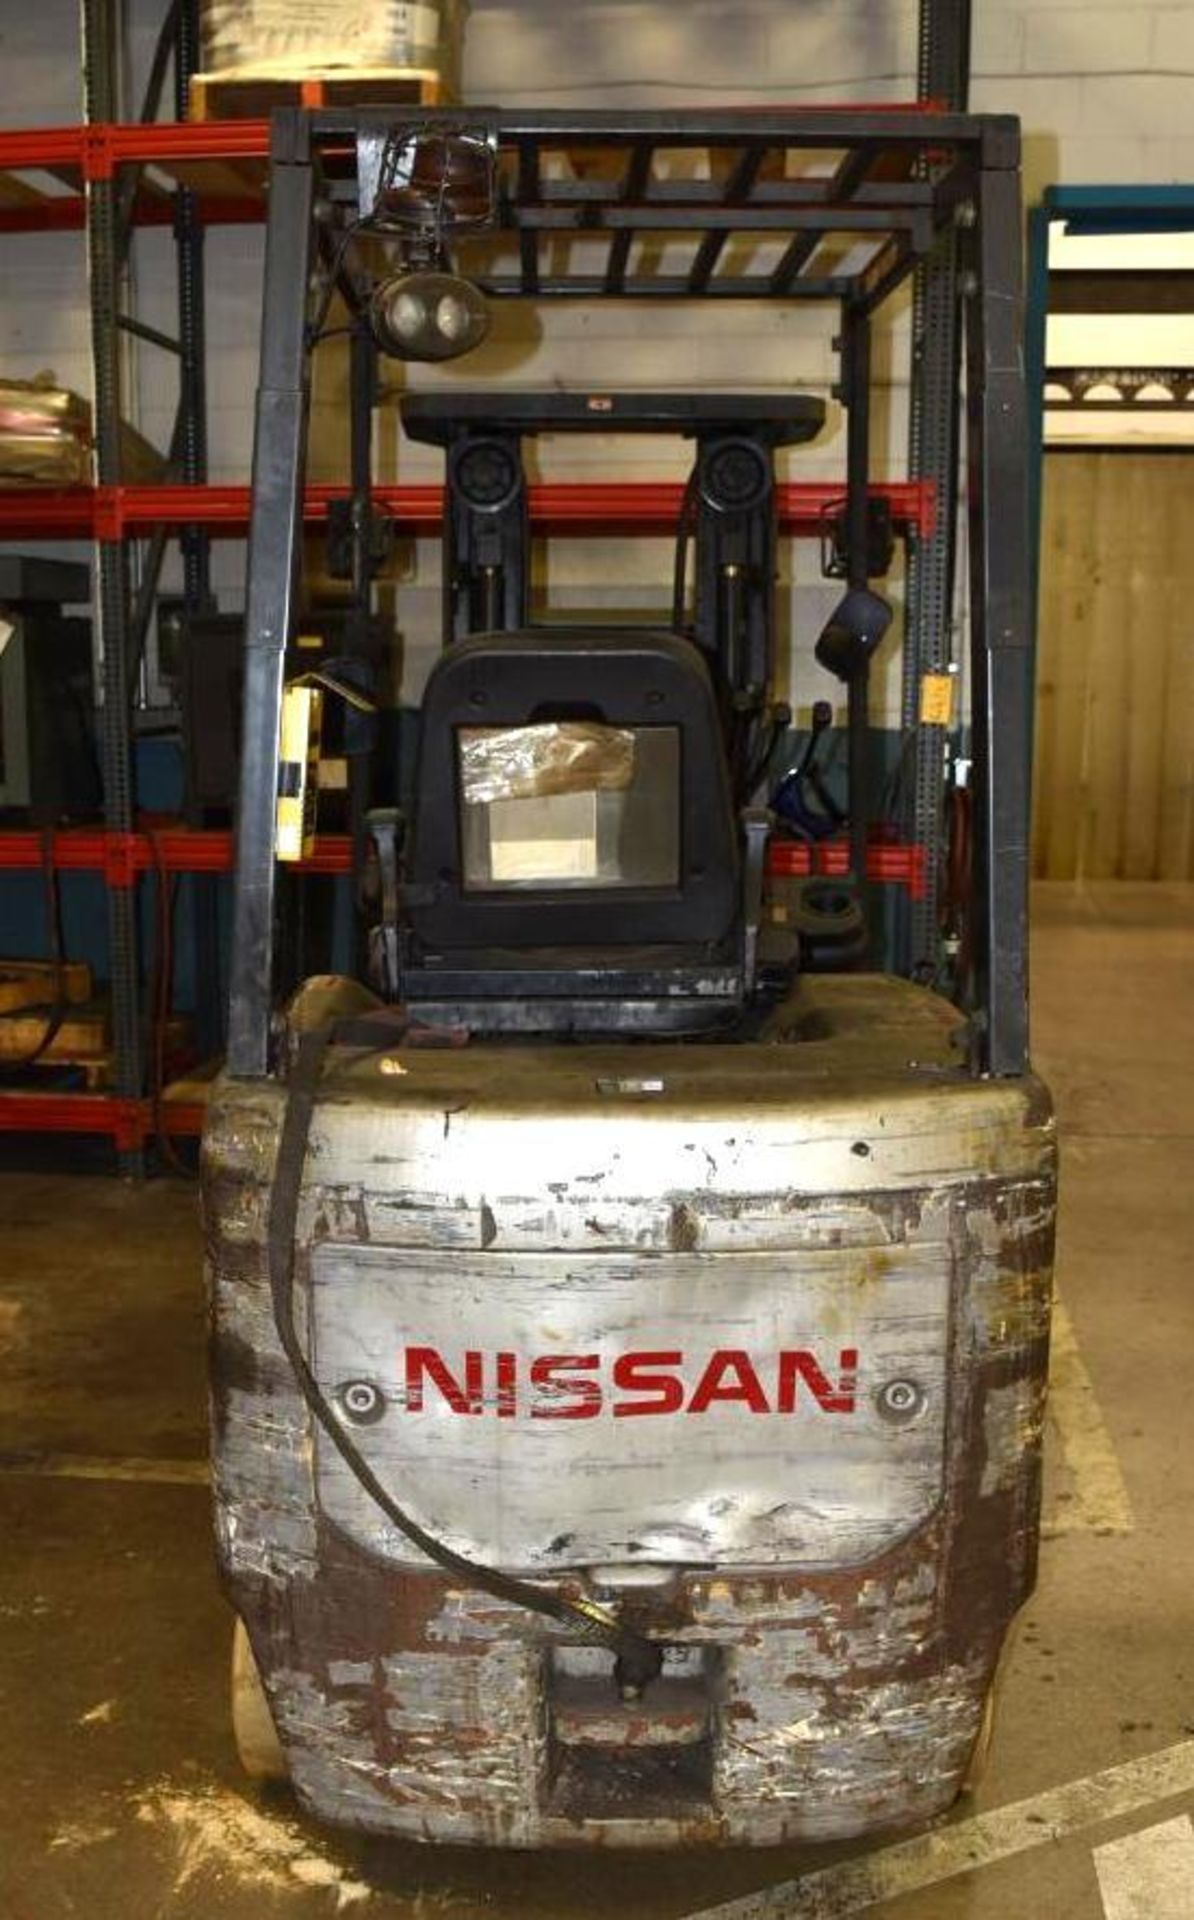 Nissan 4,700-LBS. Cap. Model CP1B2L25S 48-Volt Electric Forklift Truck - Image 2 of 9